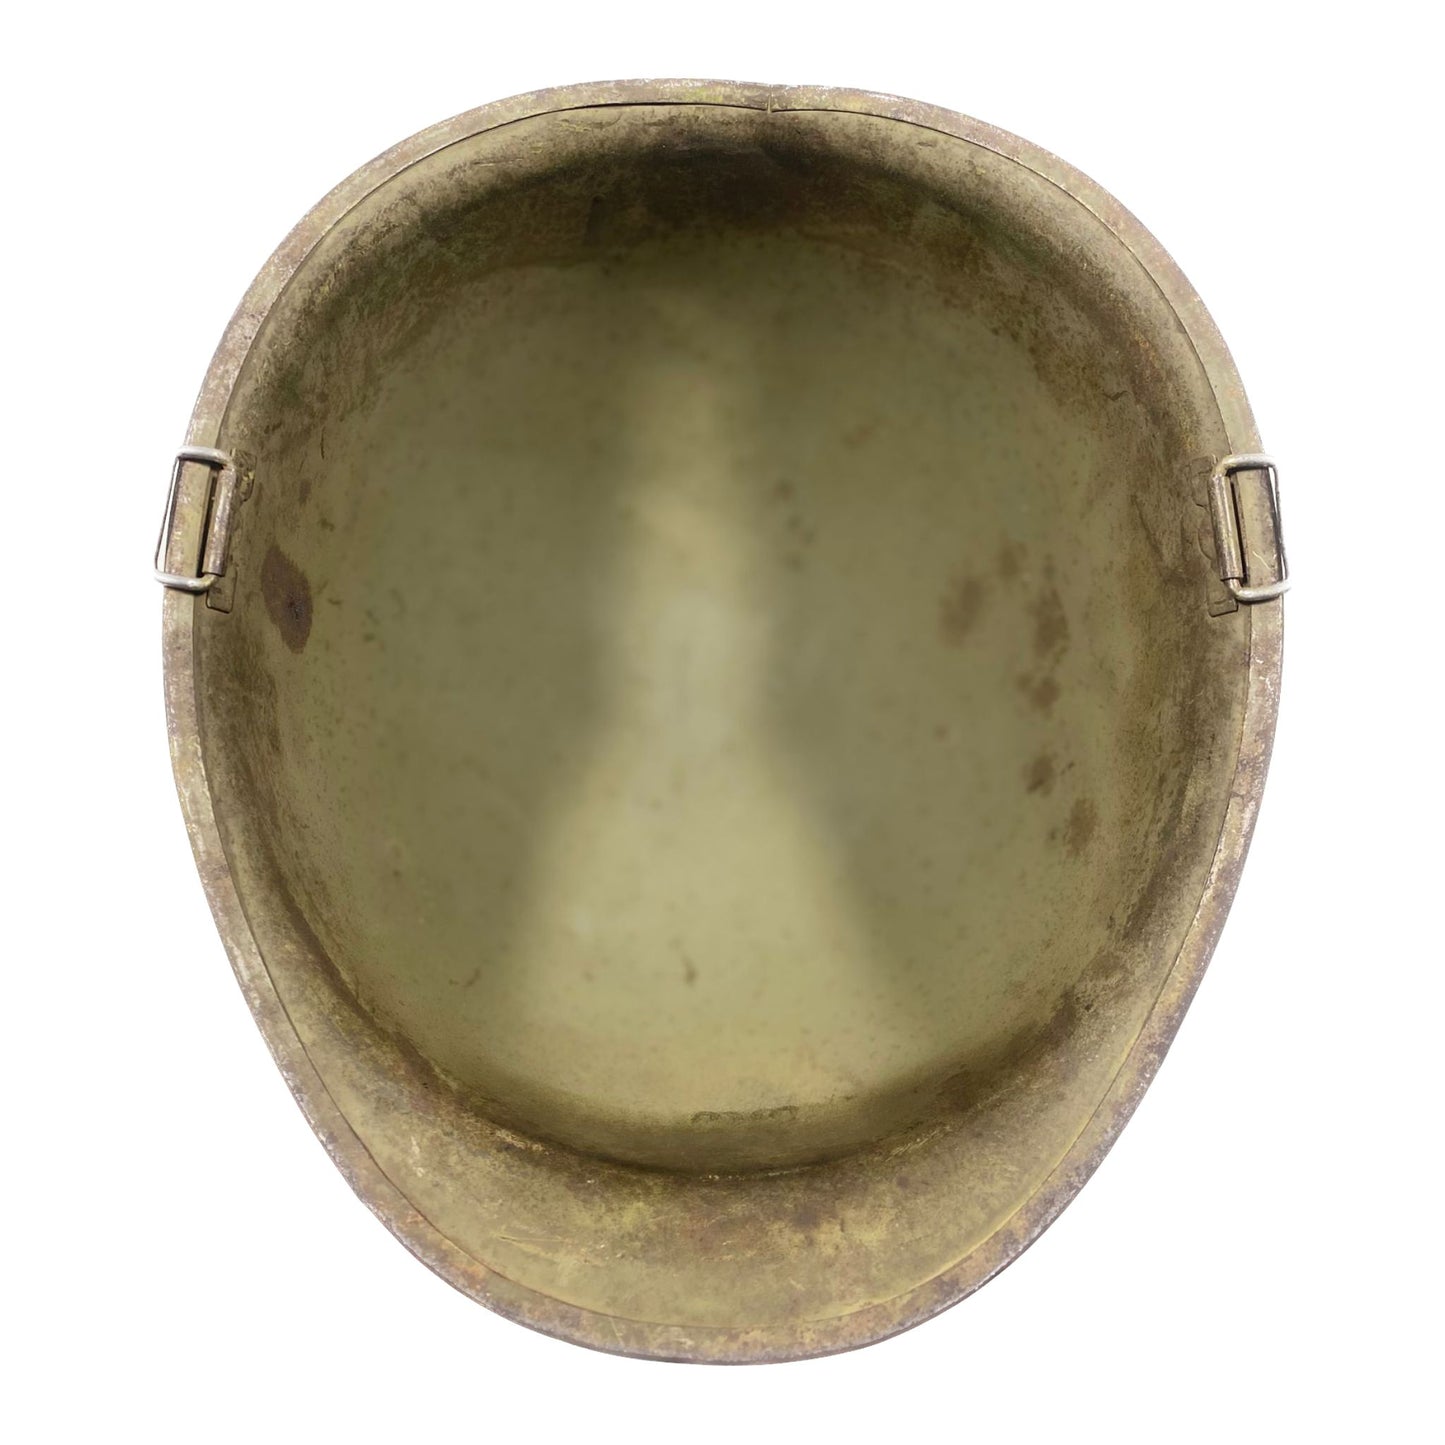 Vietnam M1 Helmet shell, McCord, rear seam, M143A - 1952/1953